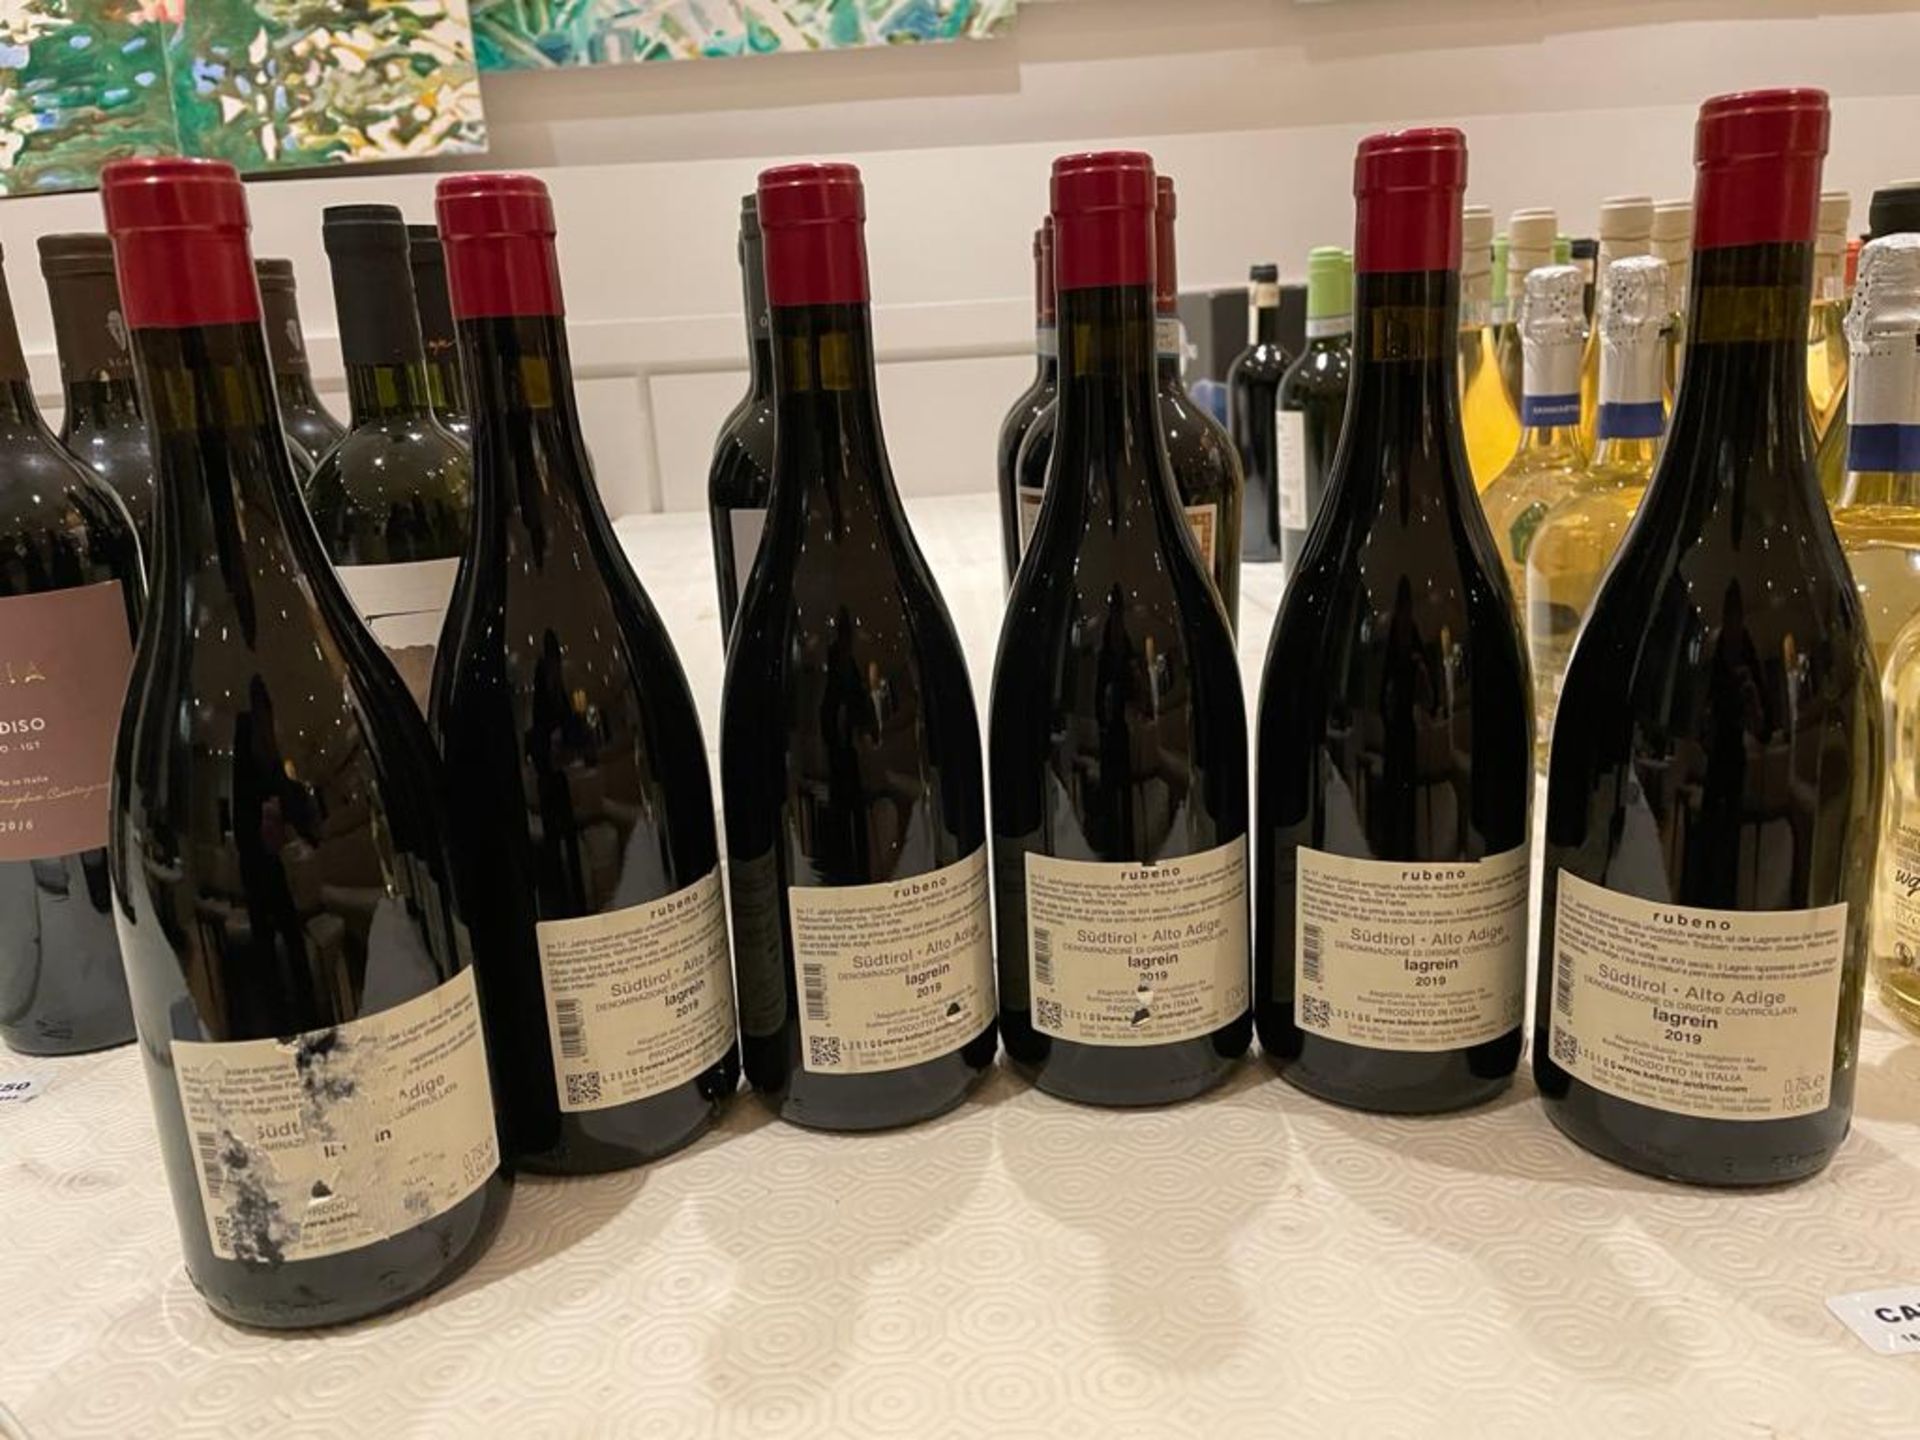 6 x Bottles Of RUBENO LAGRIEN - New/Unopened Restaurant Stock - 2019 - 0.75l - Ref: CAM553 - CL612 - Image 3 of 3